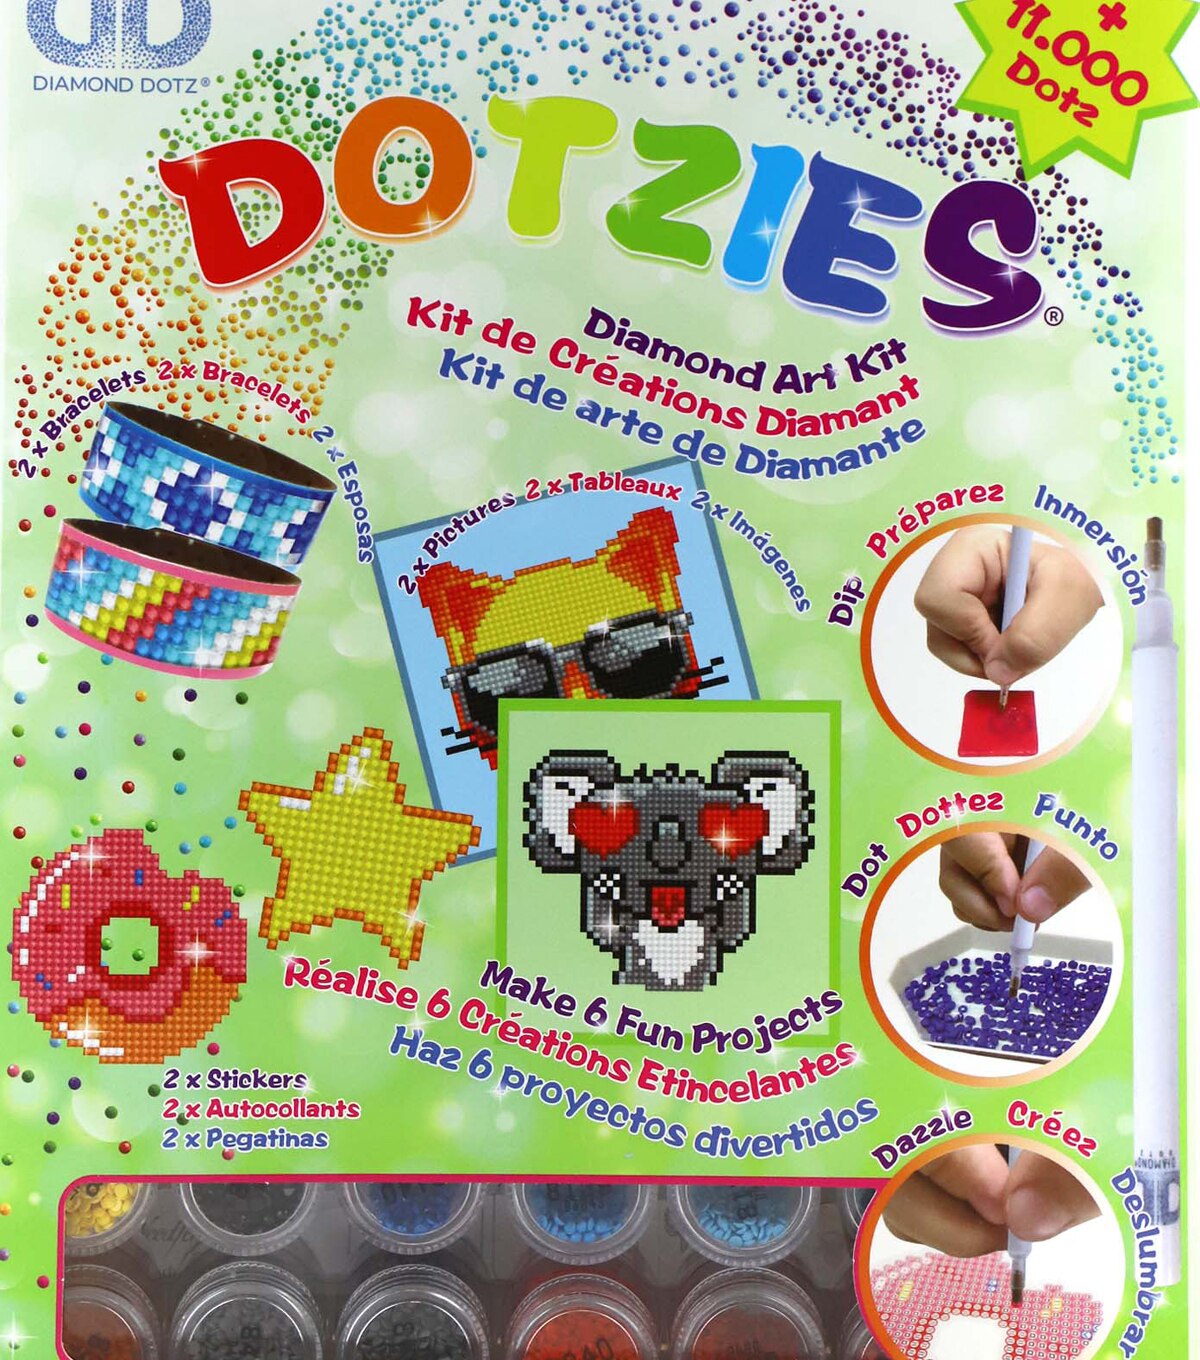 Diamond Dotz DOTZIES Diamond Art Sticker Kit -Multi Pack Look 3/Pkg